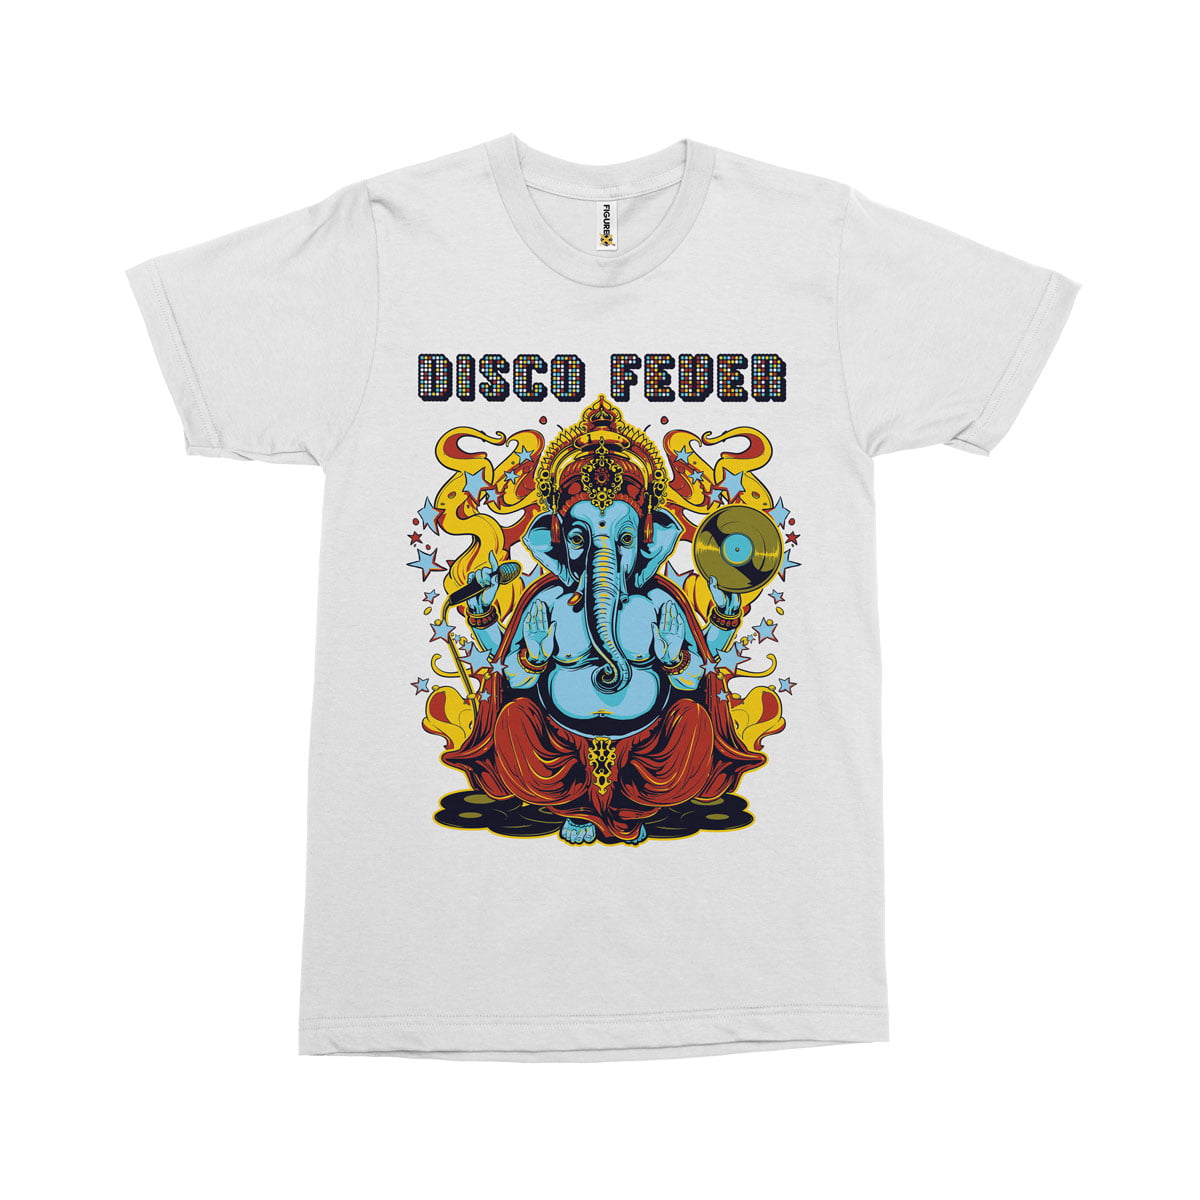 Disco forever fil tisort b - disco fever fil tasarımlı t-shirt - figurex